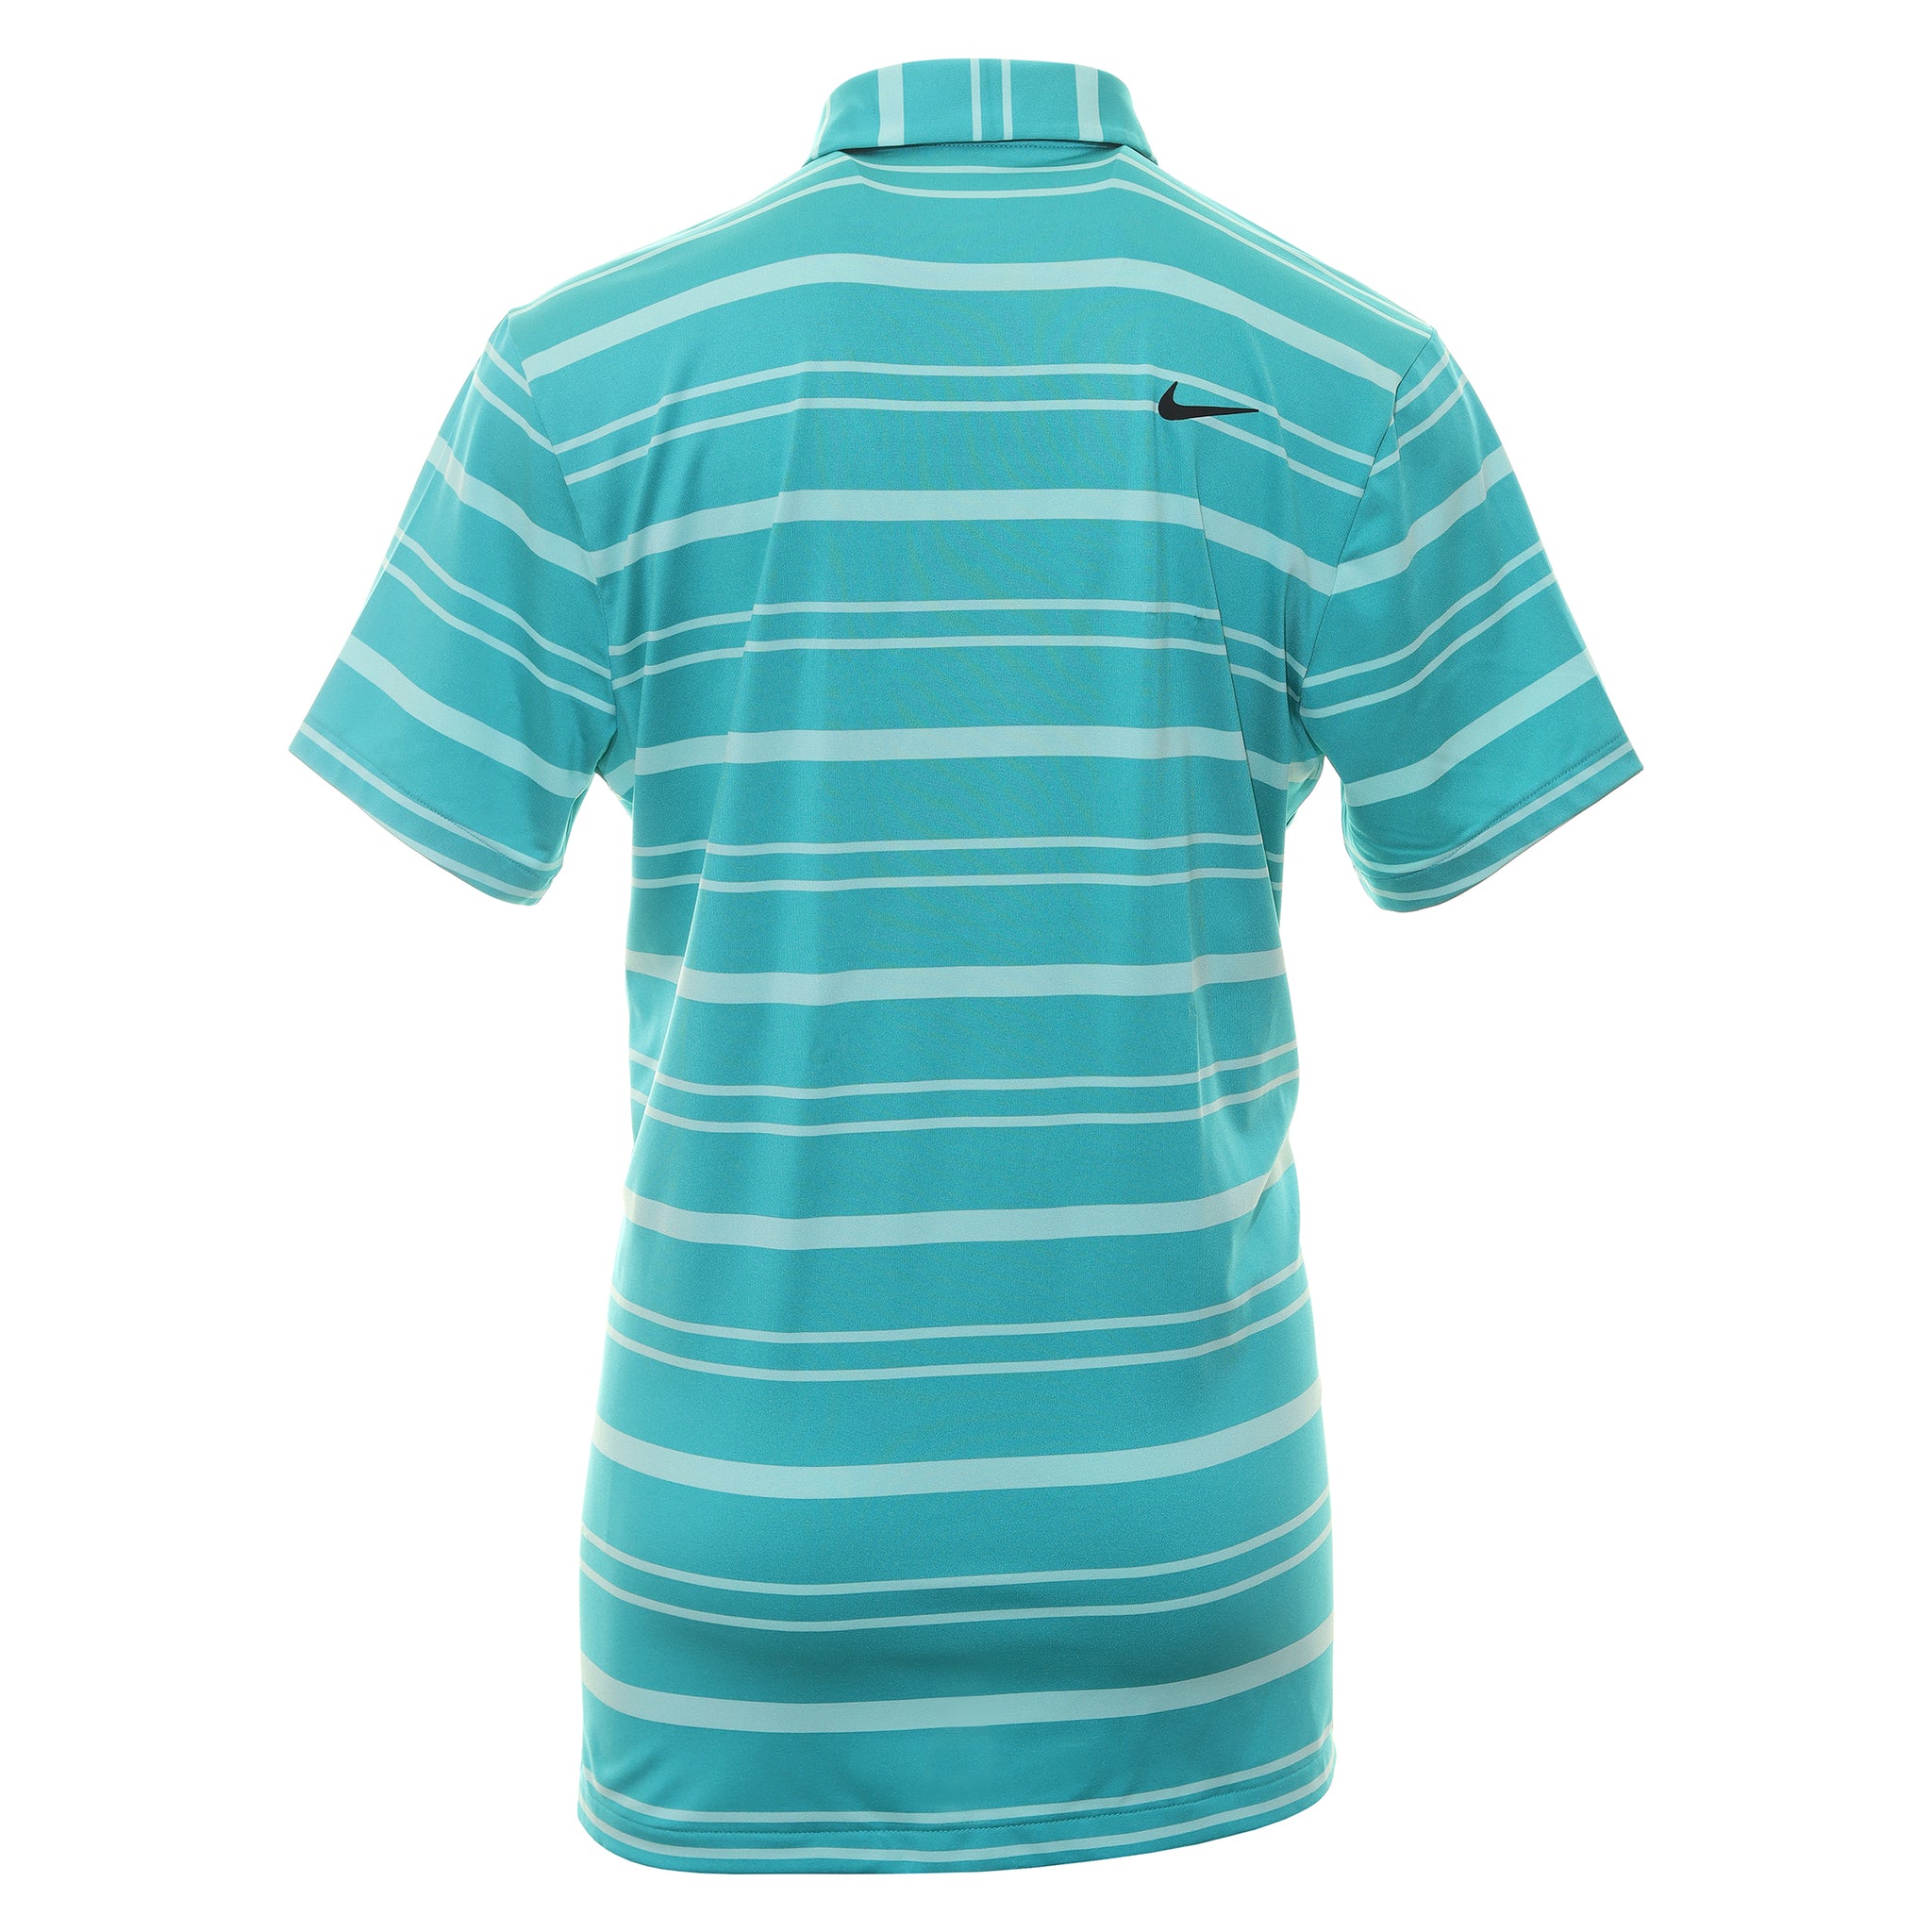 nike-golf-dri-fit-tour-stripe-shirt-dr5300-teal-nebula-367-function18